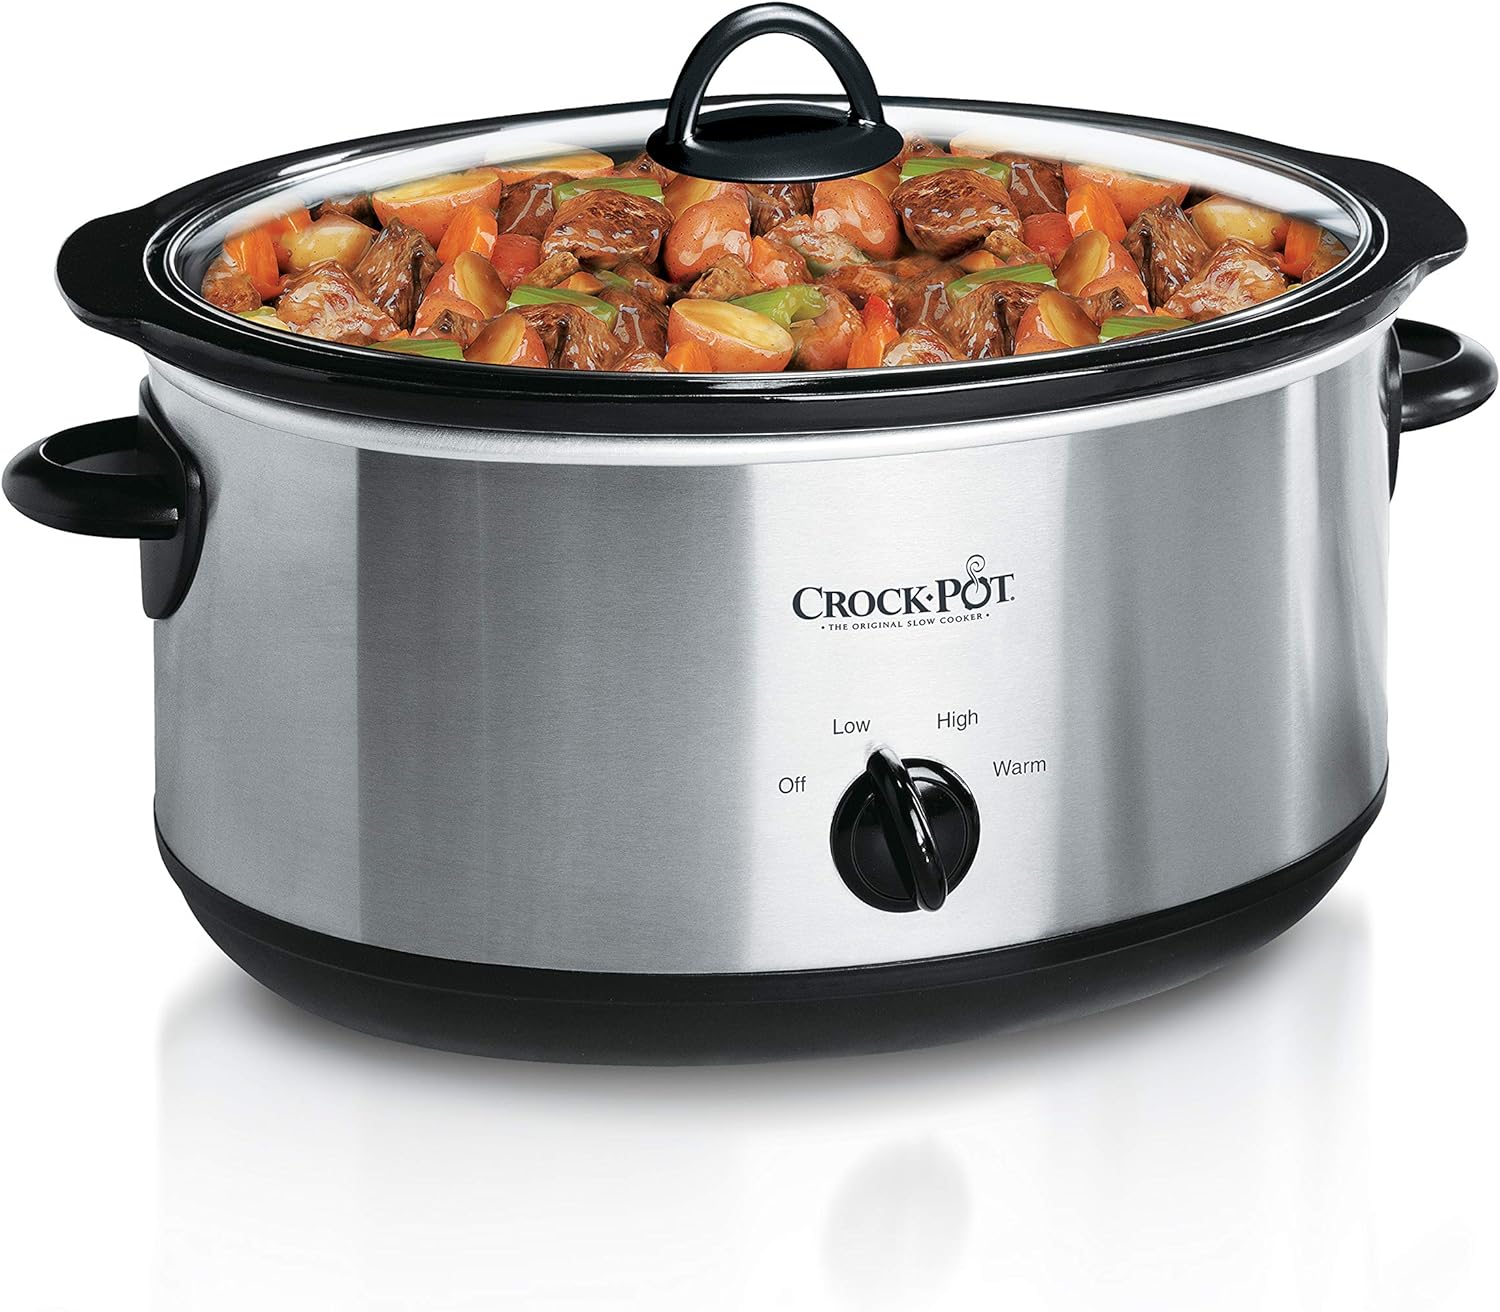 Crock-Pot Small 3.5 Quart Casserole Manual Slow Cooker and Food Warmer, Charcoal